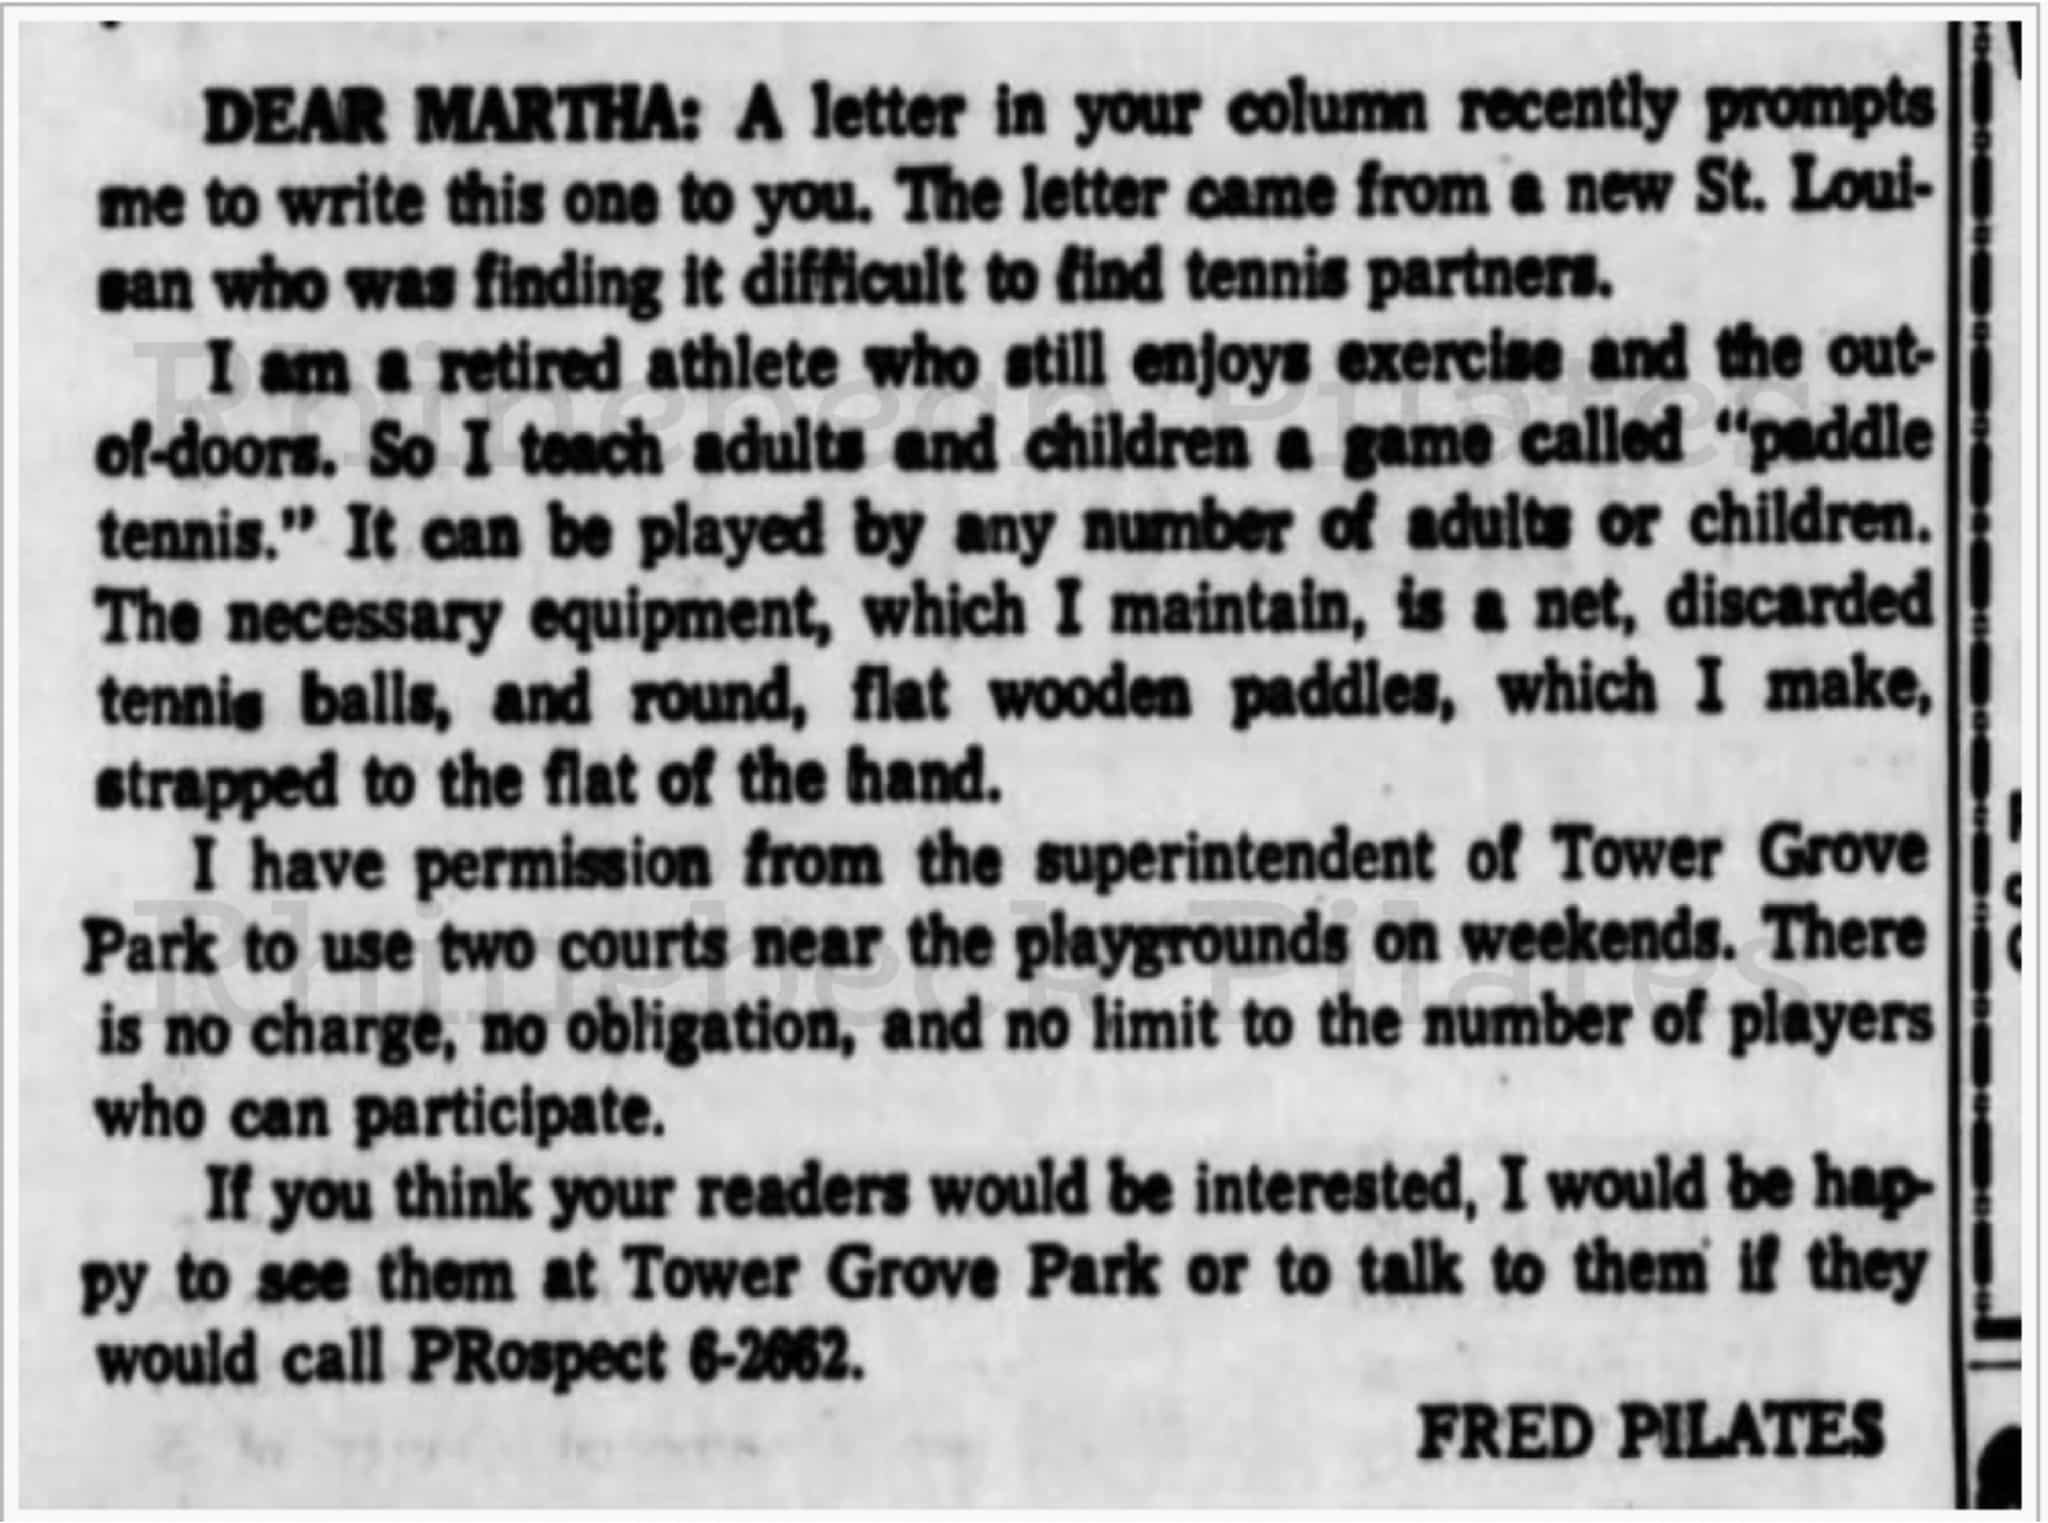 Fred Pilates Article "Dear Martha"